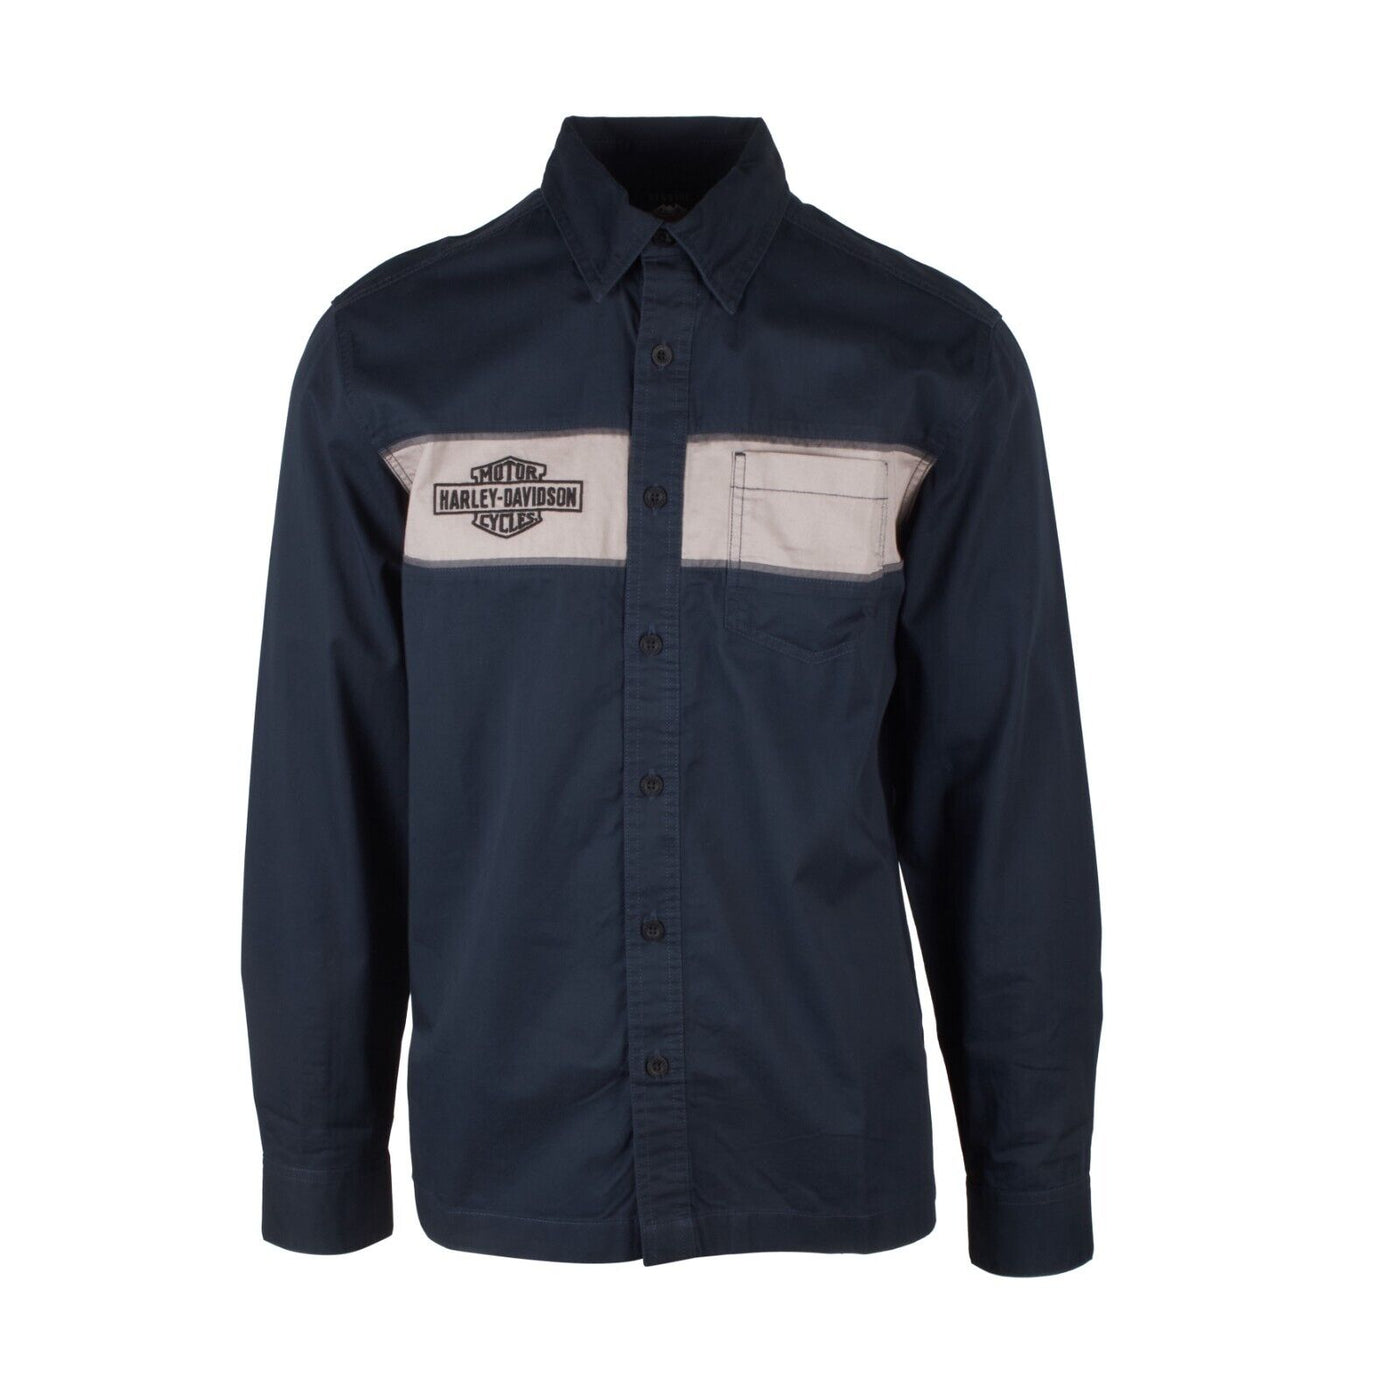 Harley-Davidson Men's Arched Graphic Colorblock Mechanics L/S Woven Shirt (S45)